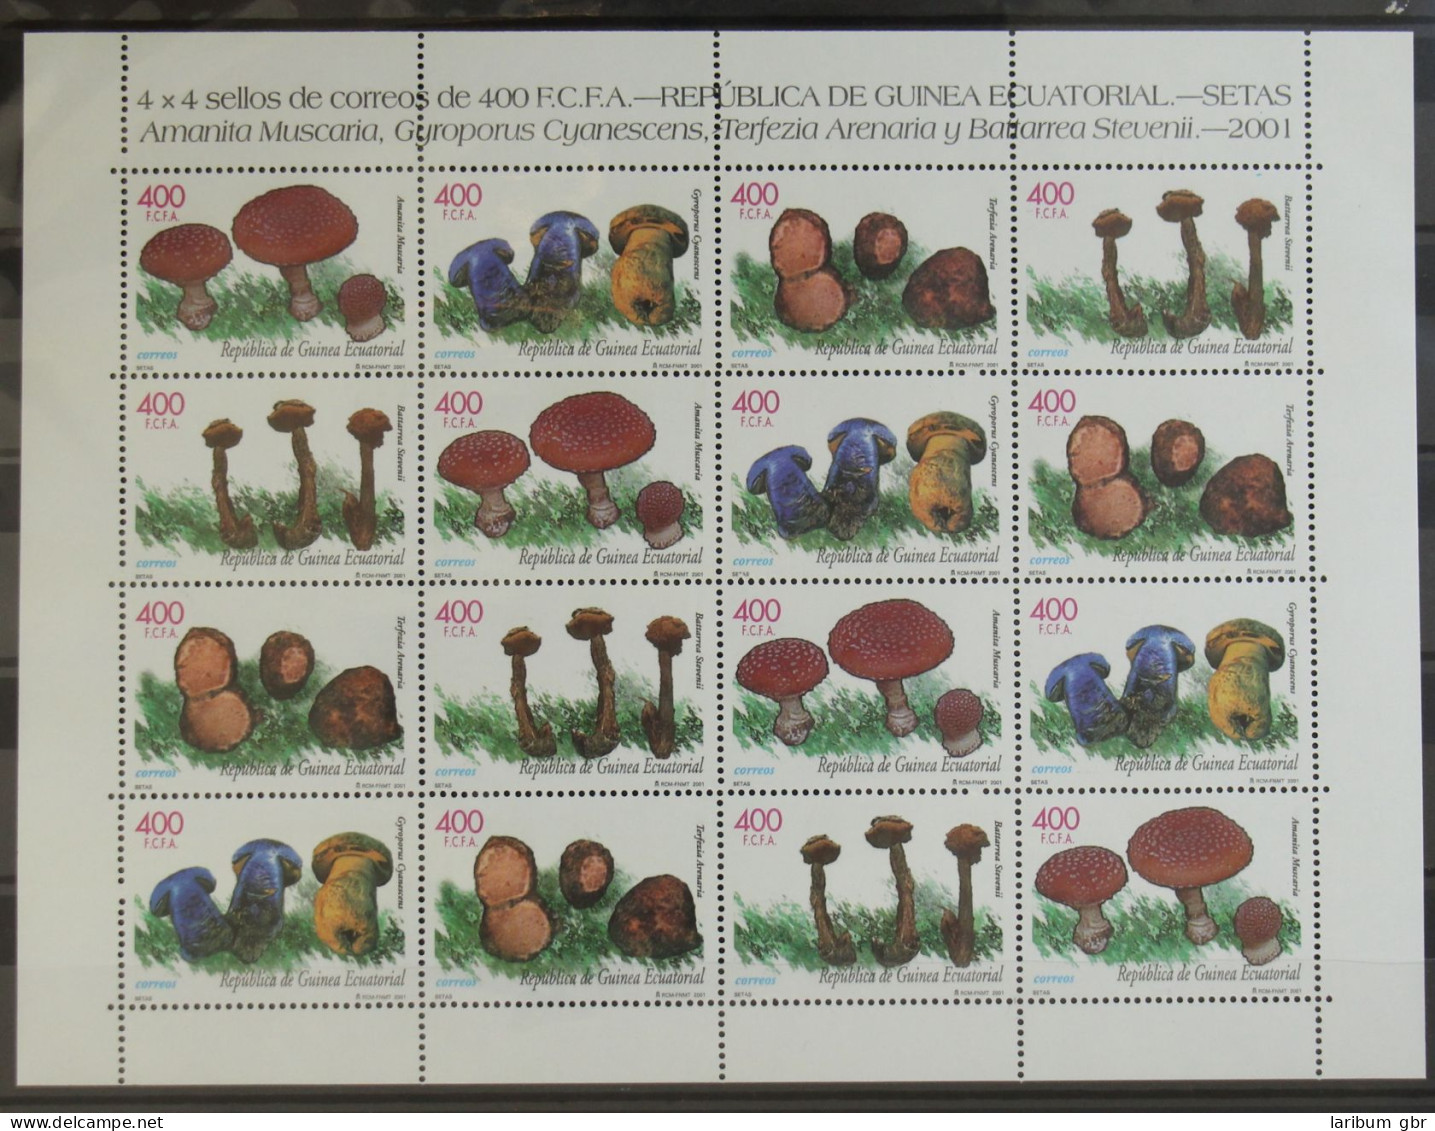 Äquatorialguinea 1898-1901 Postfrisch ZD-Bogen / Pilze #GG137 - Equatorial Guinea